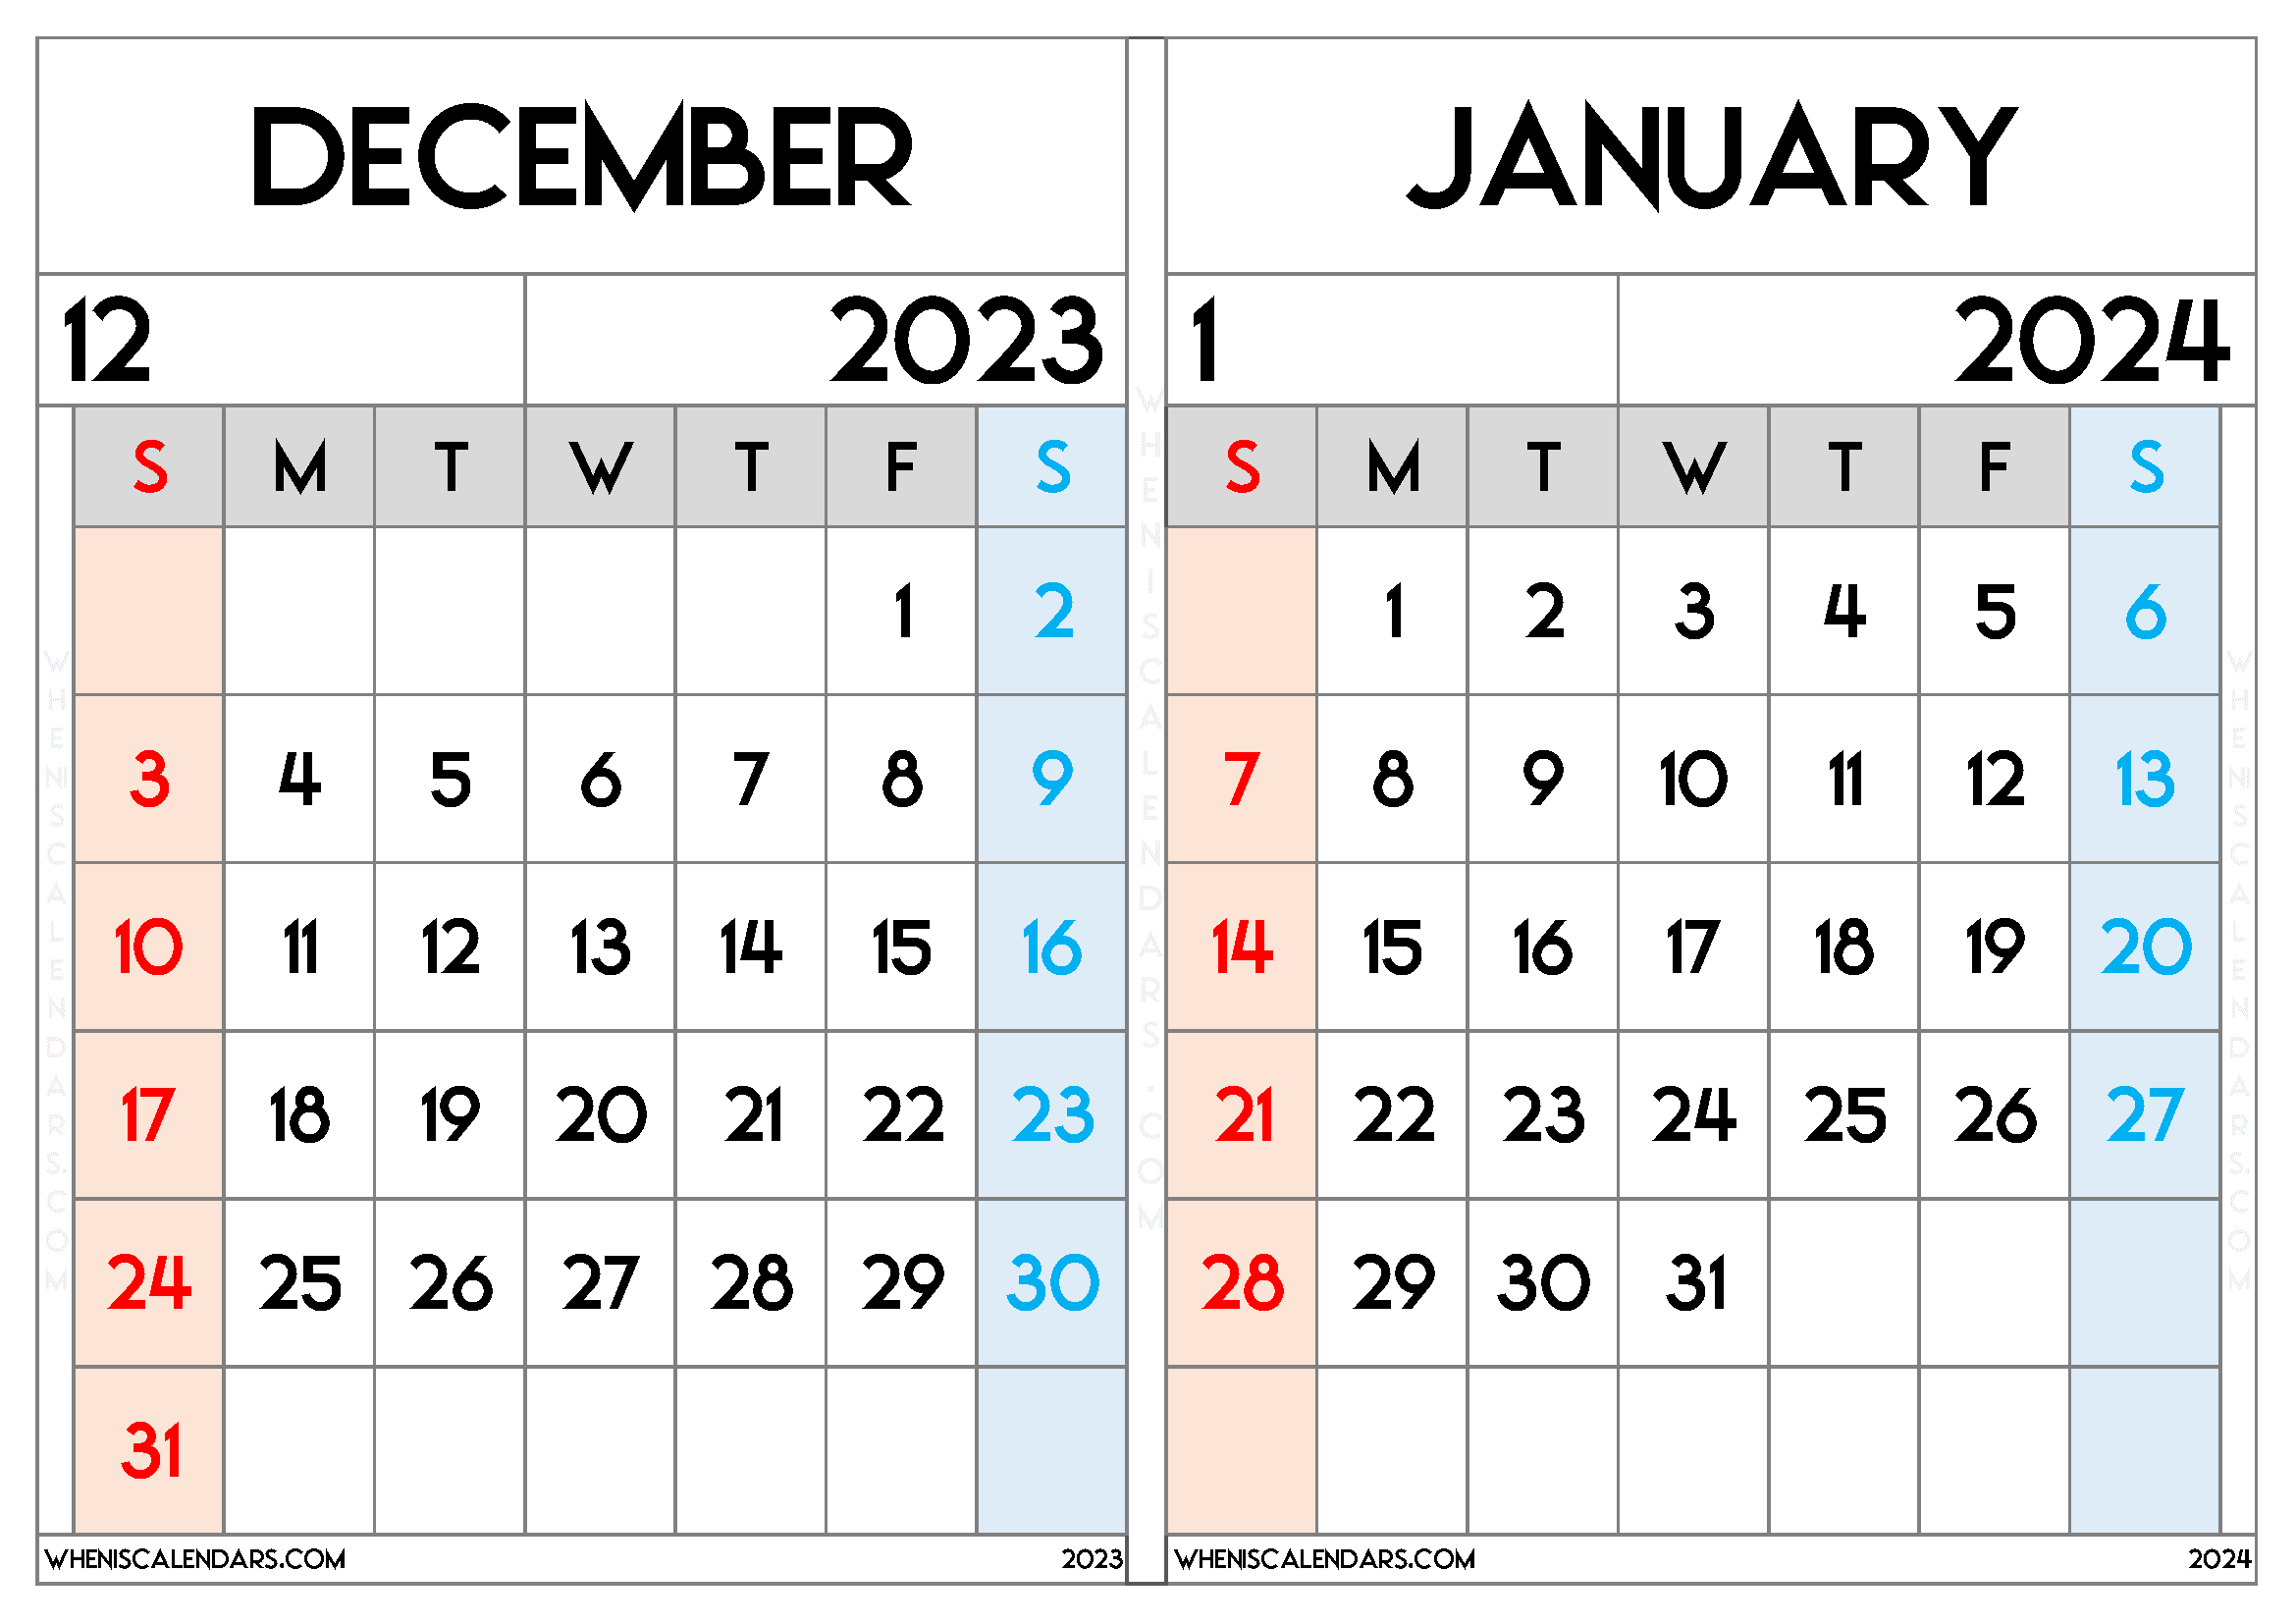 Free December 2023 January 2024 Calendar Printable Two Month for Calendar December 2023 And January 2024 Printable